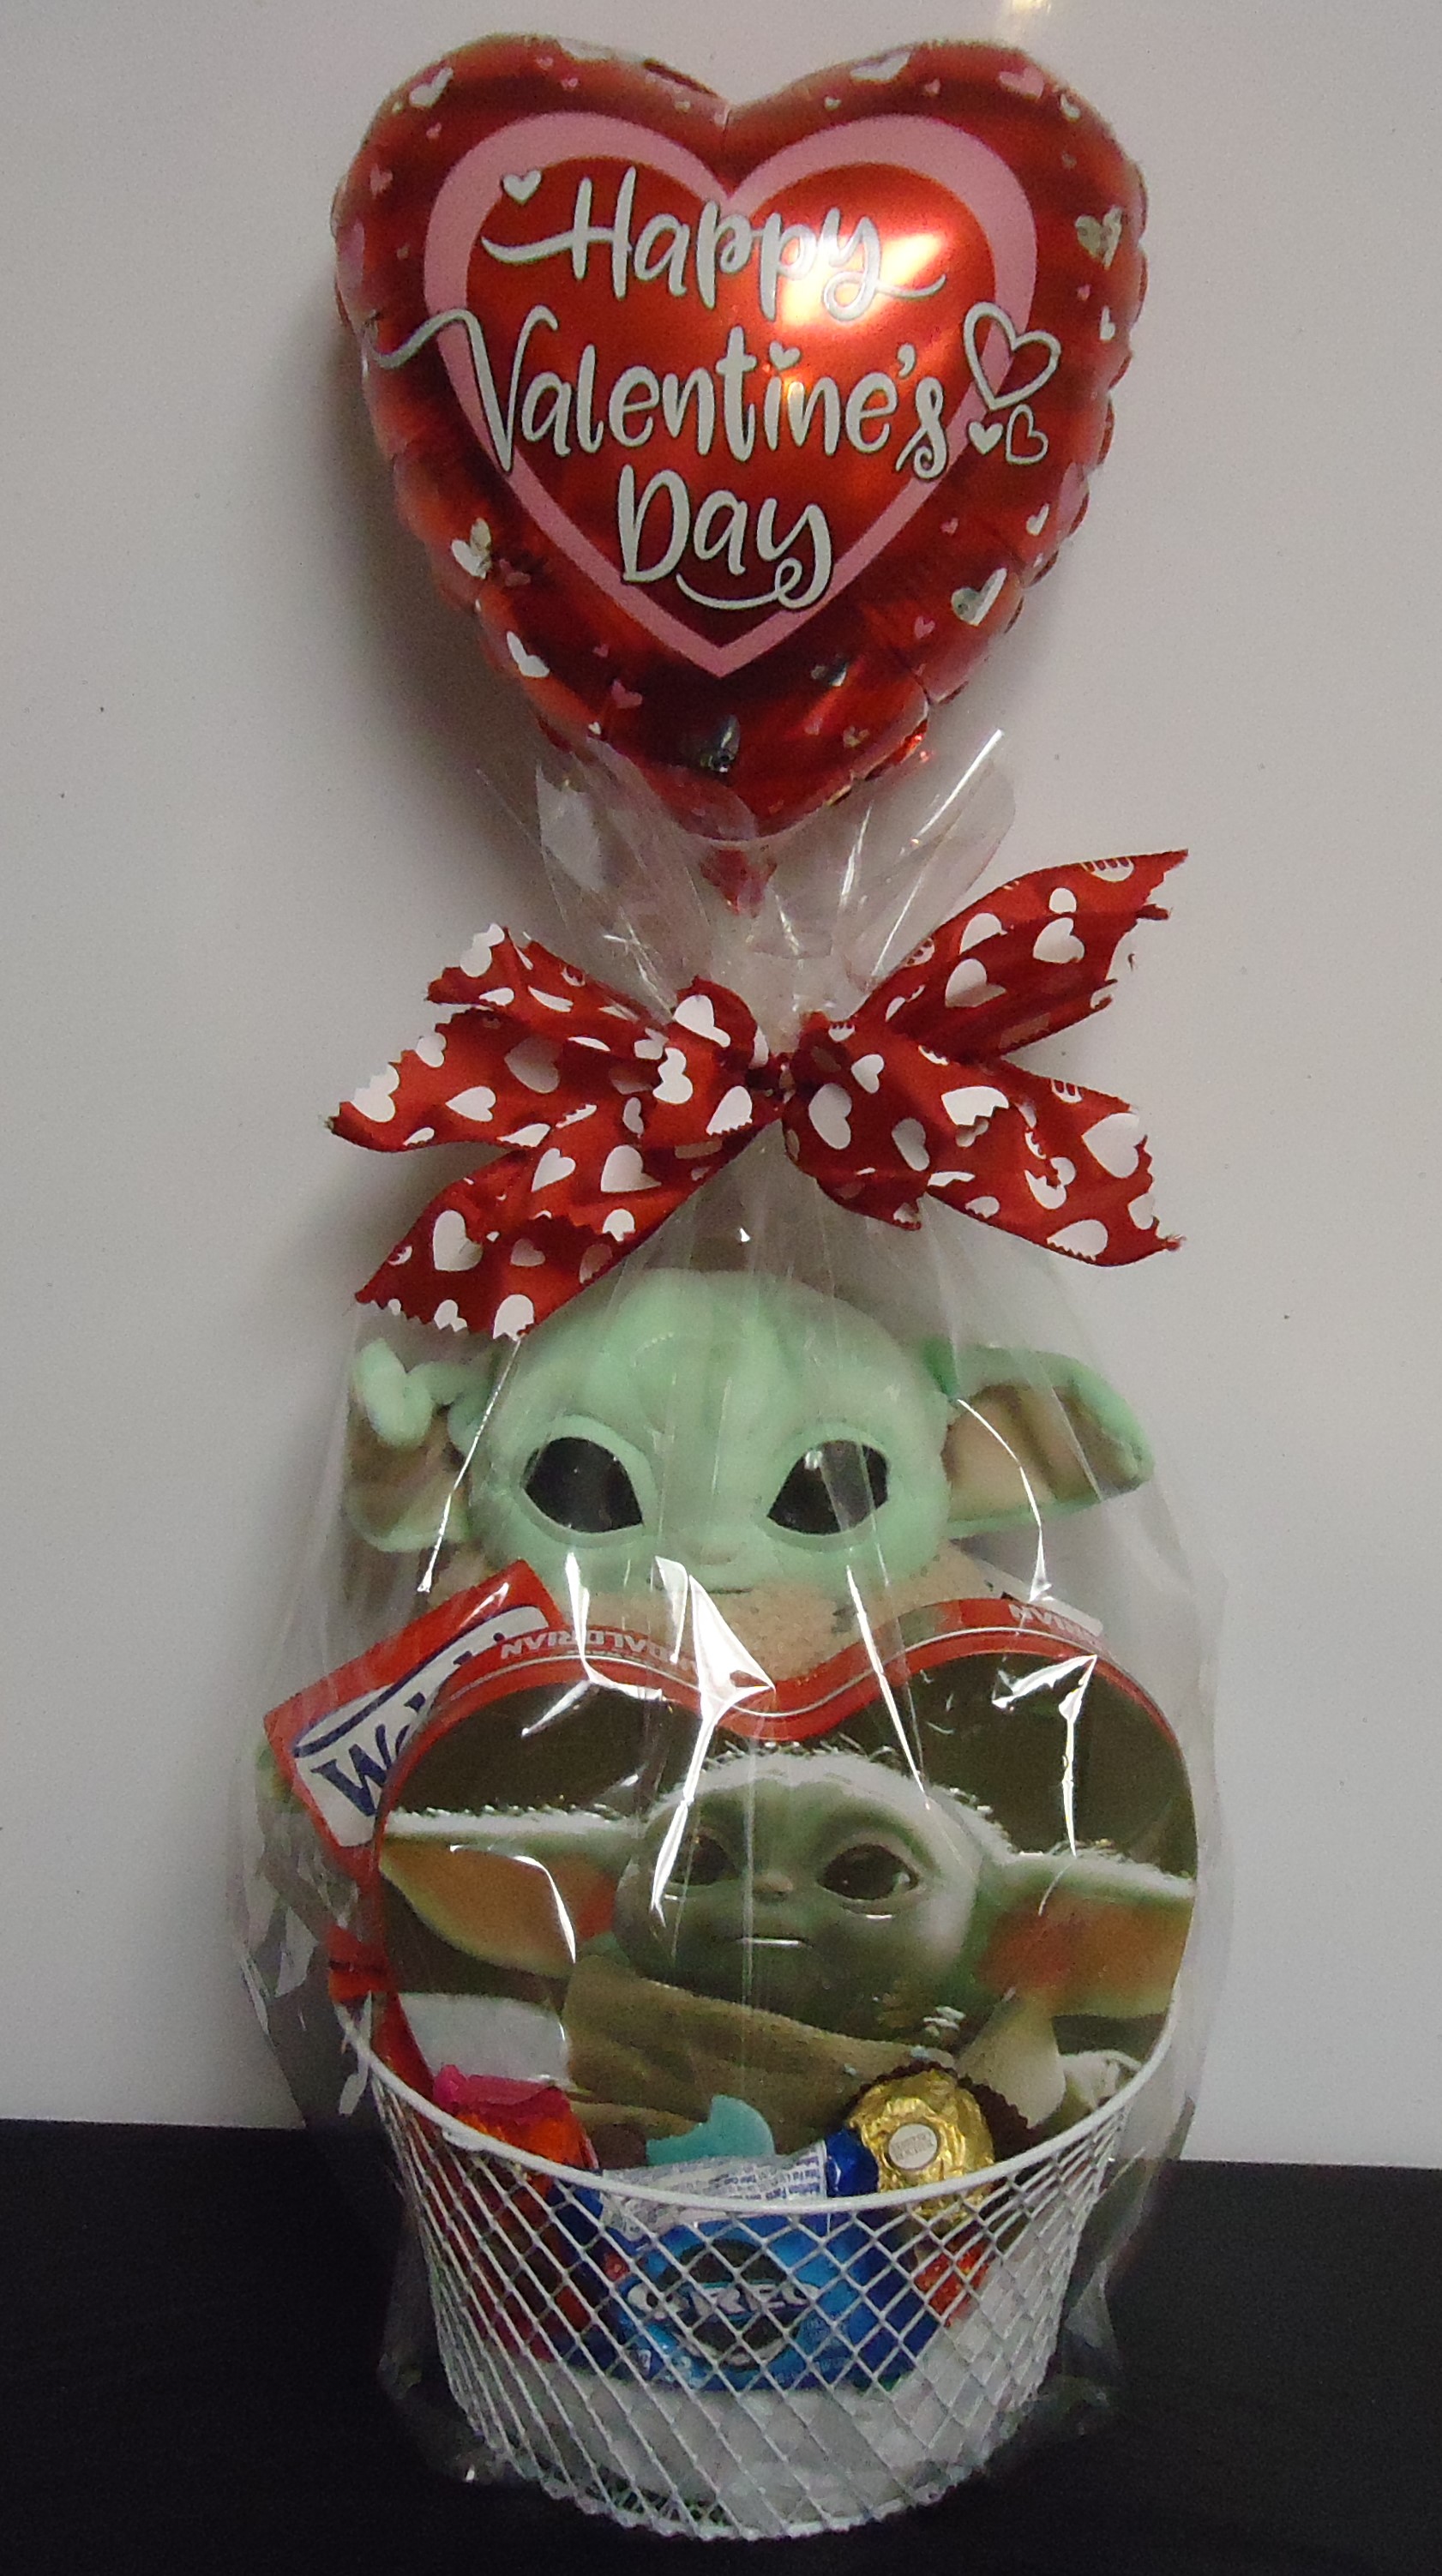 (14C) Mandalorian Plush W/
Candy Heart Box & Balloon
$40.00